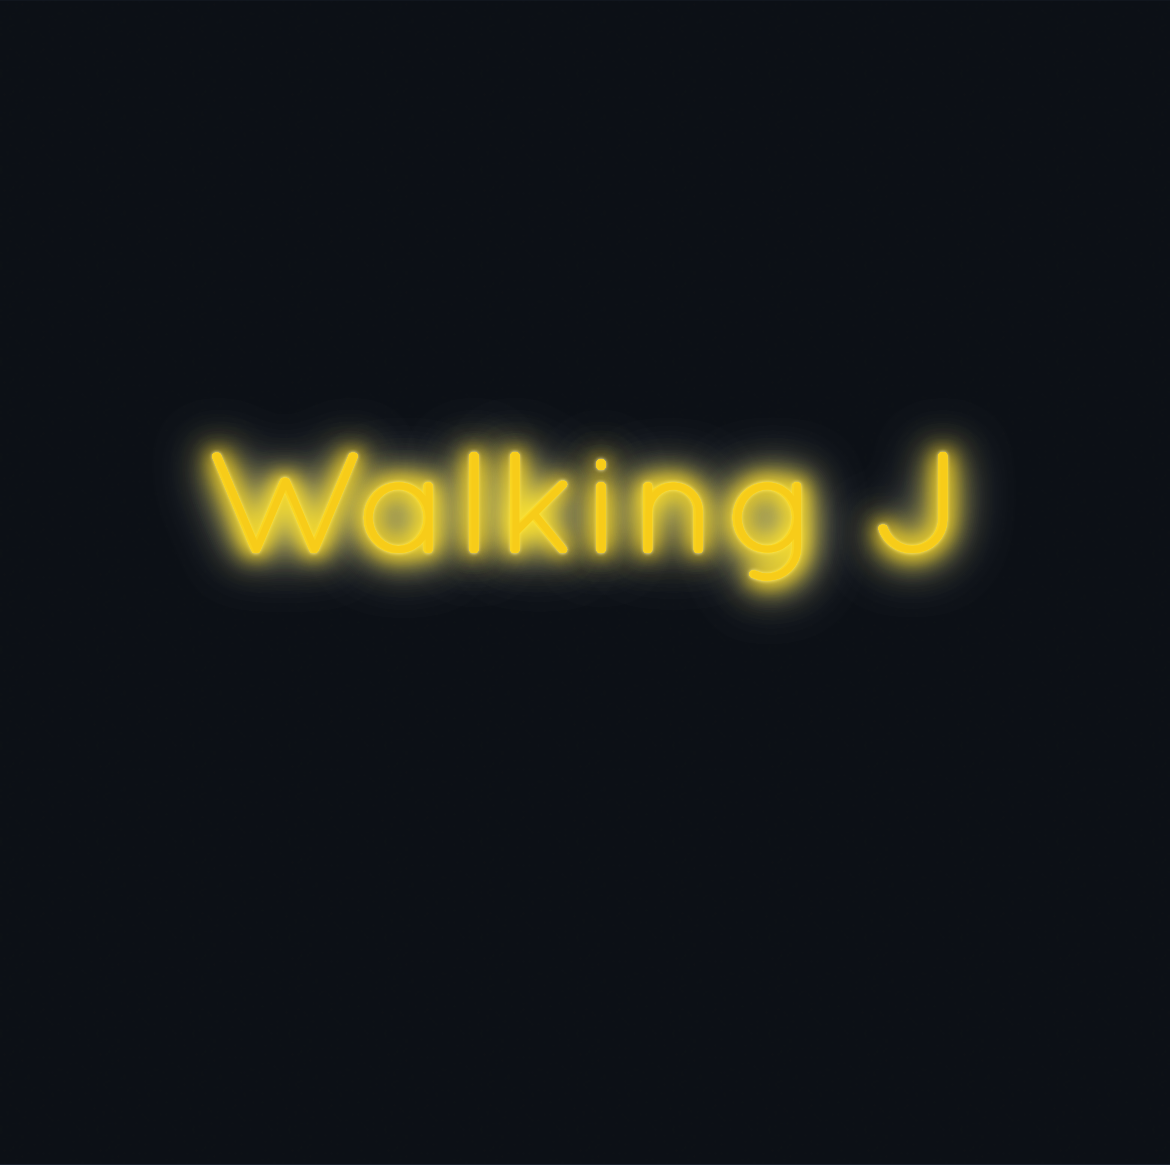 Custom neon sign - Walking J